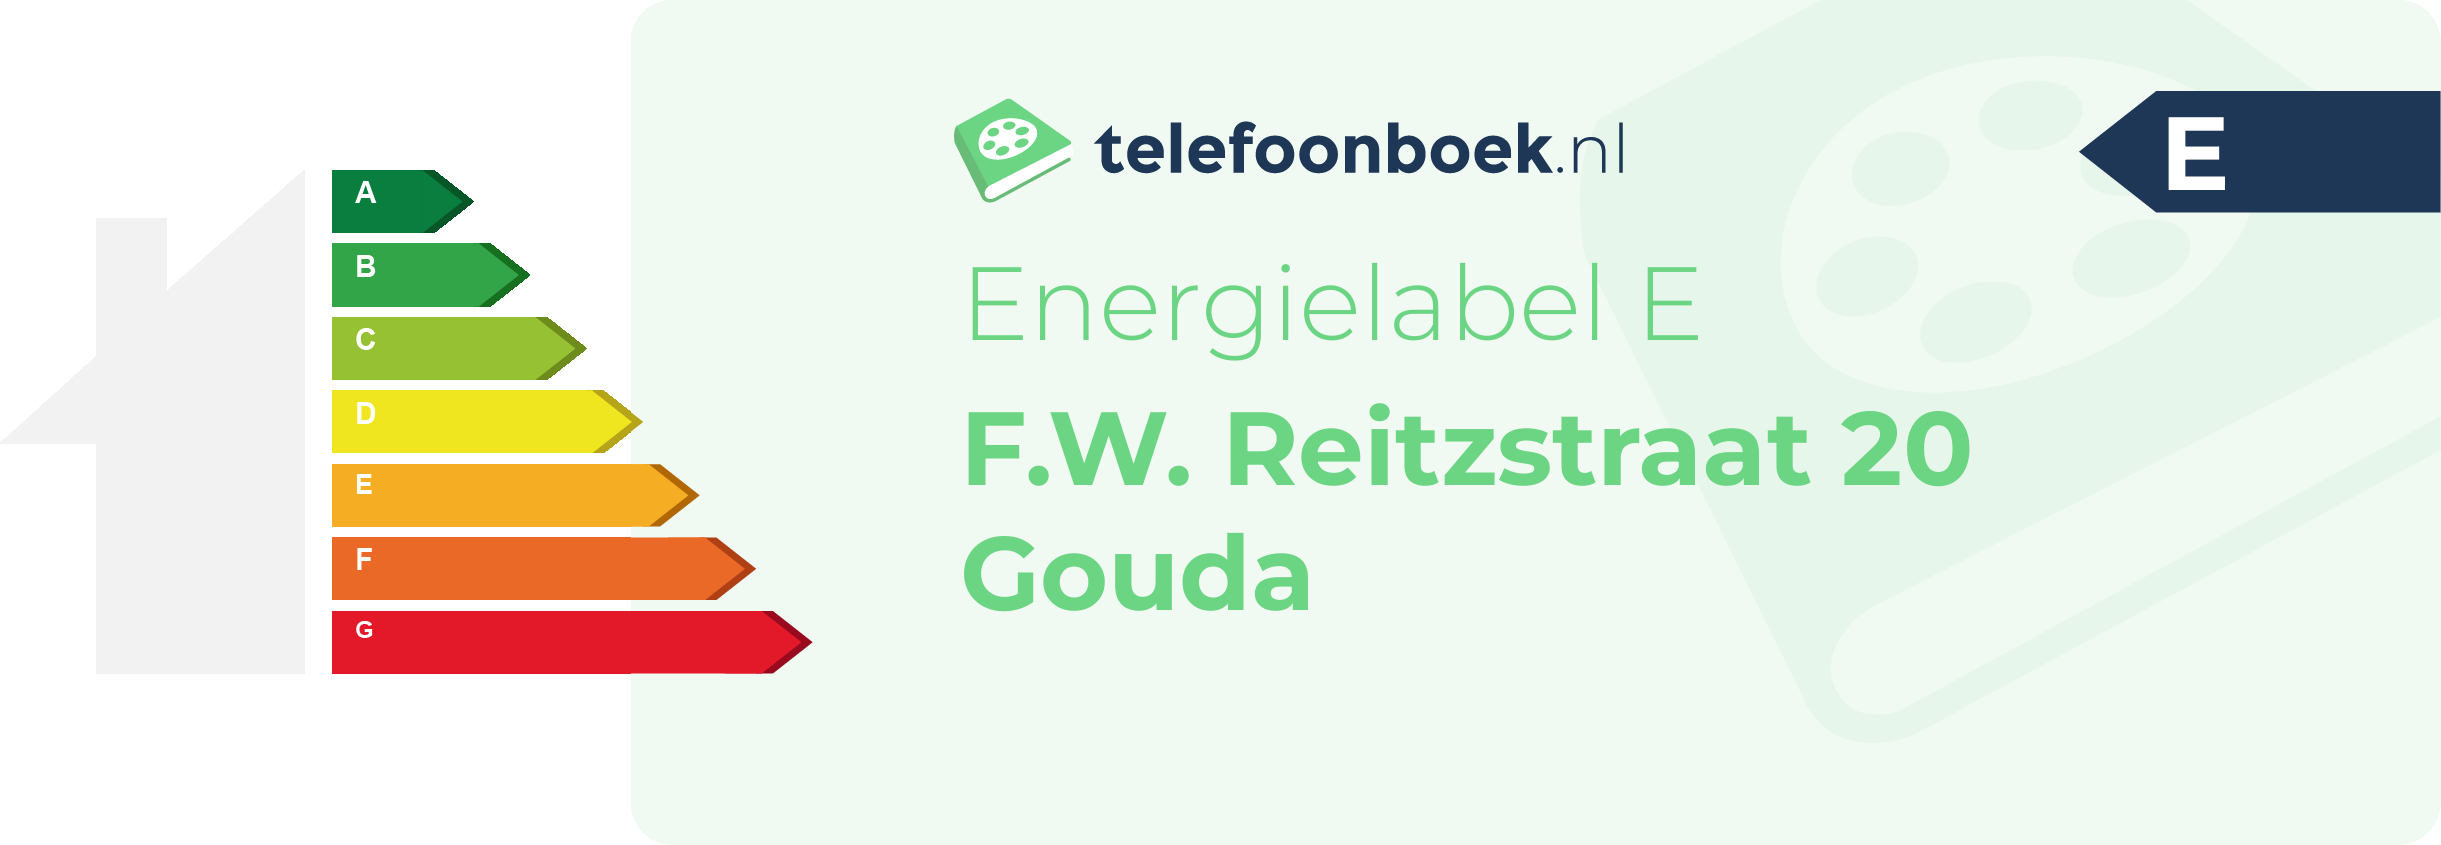 Energielabel F.W. Reitzstraat 20 Gouda